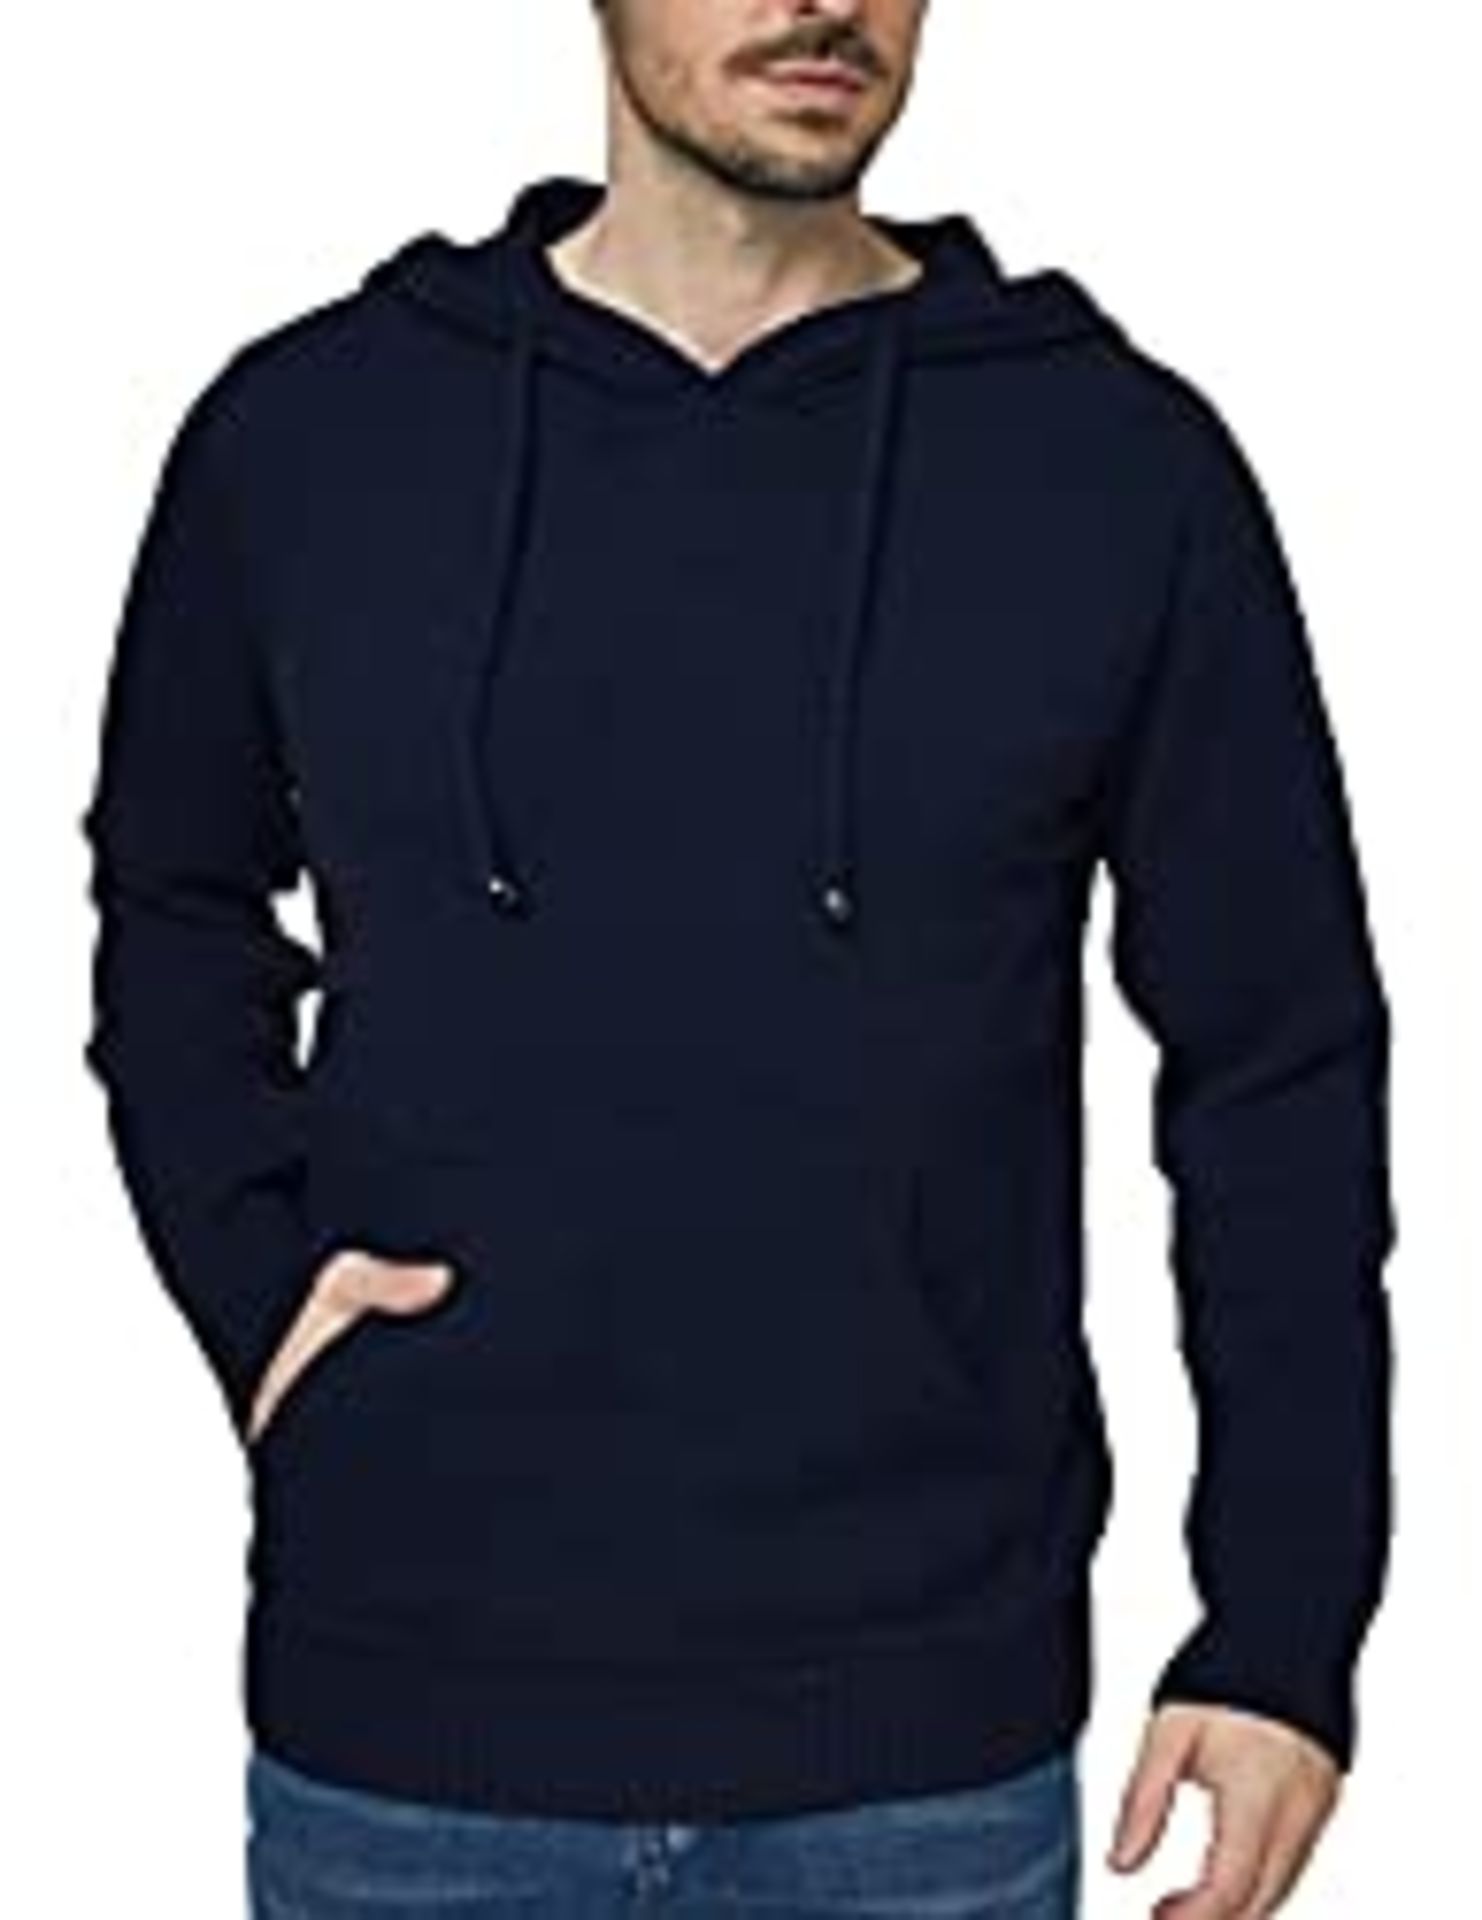 RRP £20.10 Wantdo Men s Casual Warm Full Zip Cardigan Sweater